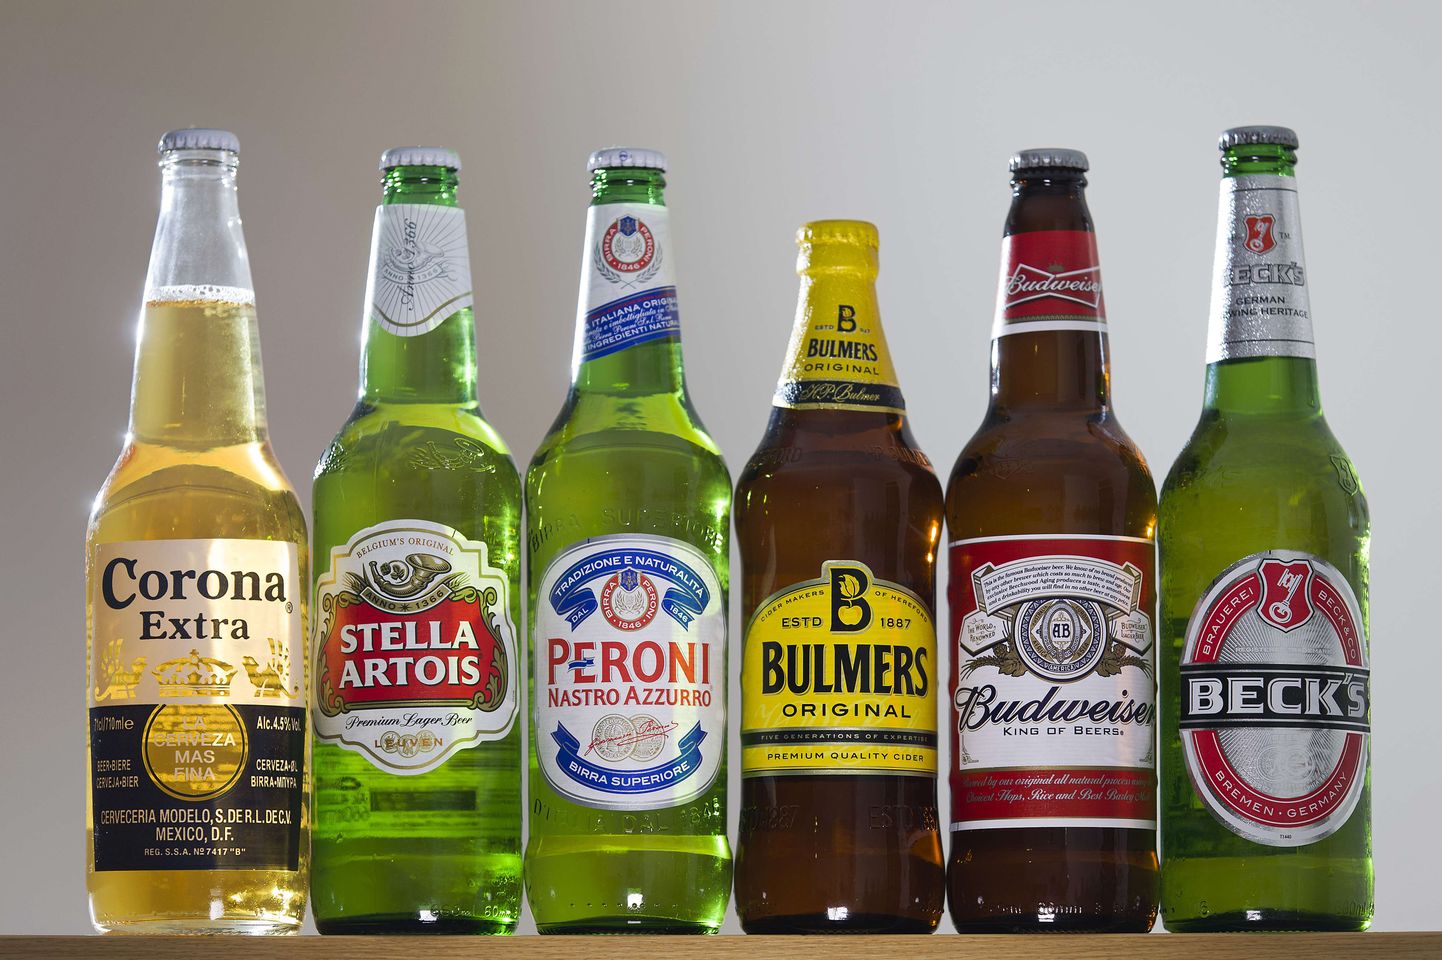 Предприятие предлагает большой выбор пива - Budweiser, Corona, Stella, Beck, Bulmers и Peroni.